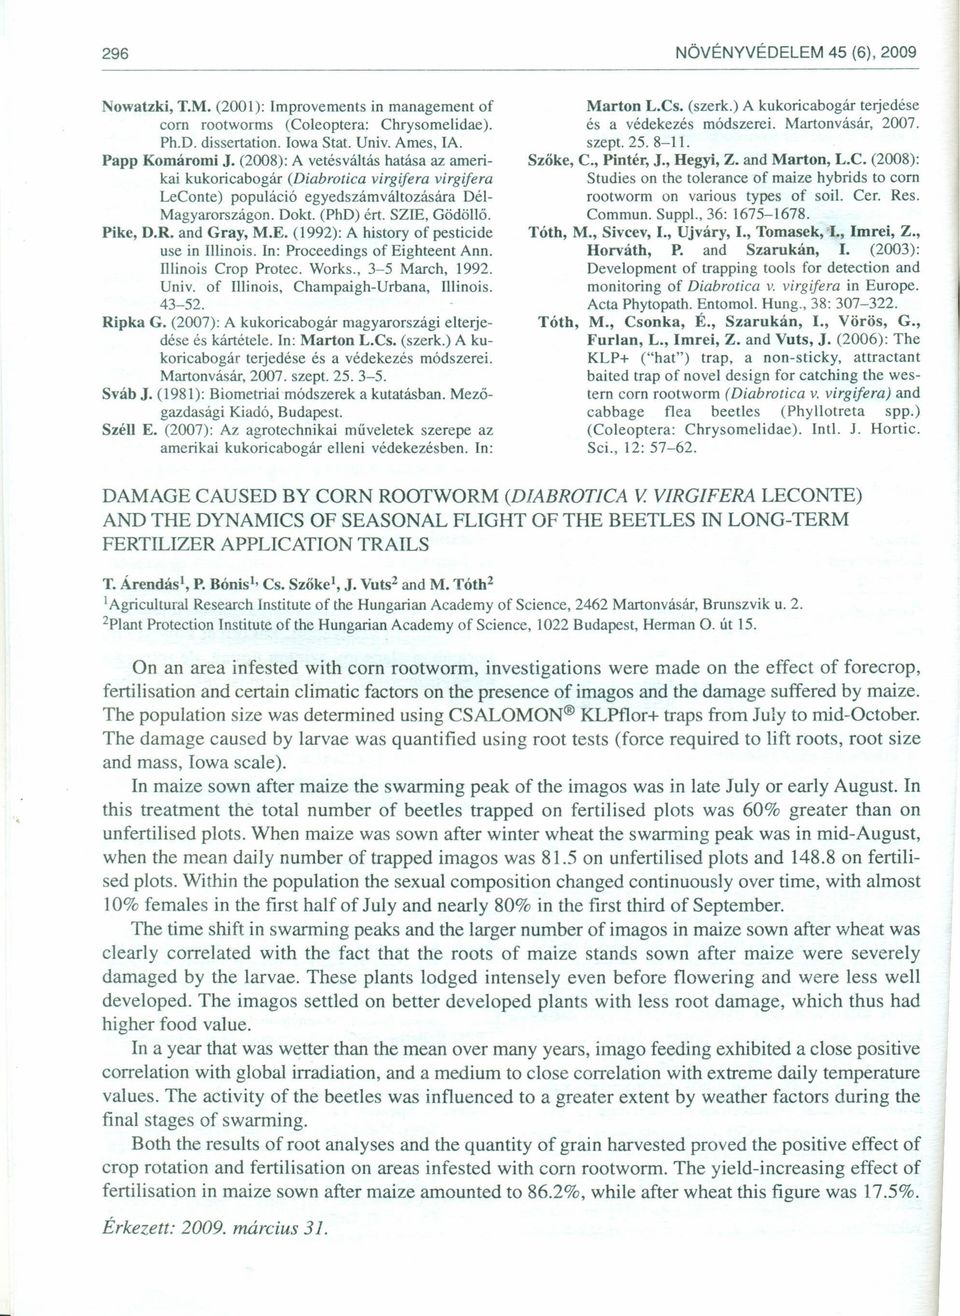 Gödöllő. Pike, D.R. and Gray, M.E. (1992): A histry f pesticide use in Illinis. In: Prceedings f Eighteent Ann. Illinis Crp Prtec. Wrks., 3-5 March, 1992. Univ. f Illinis, Champaigh-Urbana, Illinis.